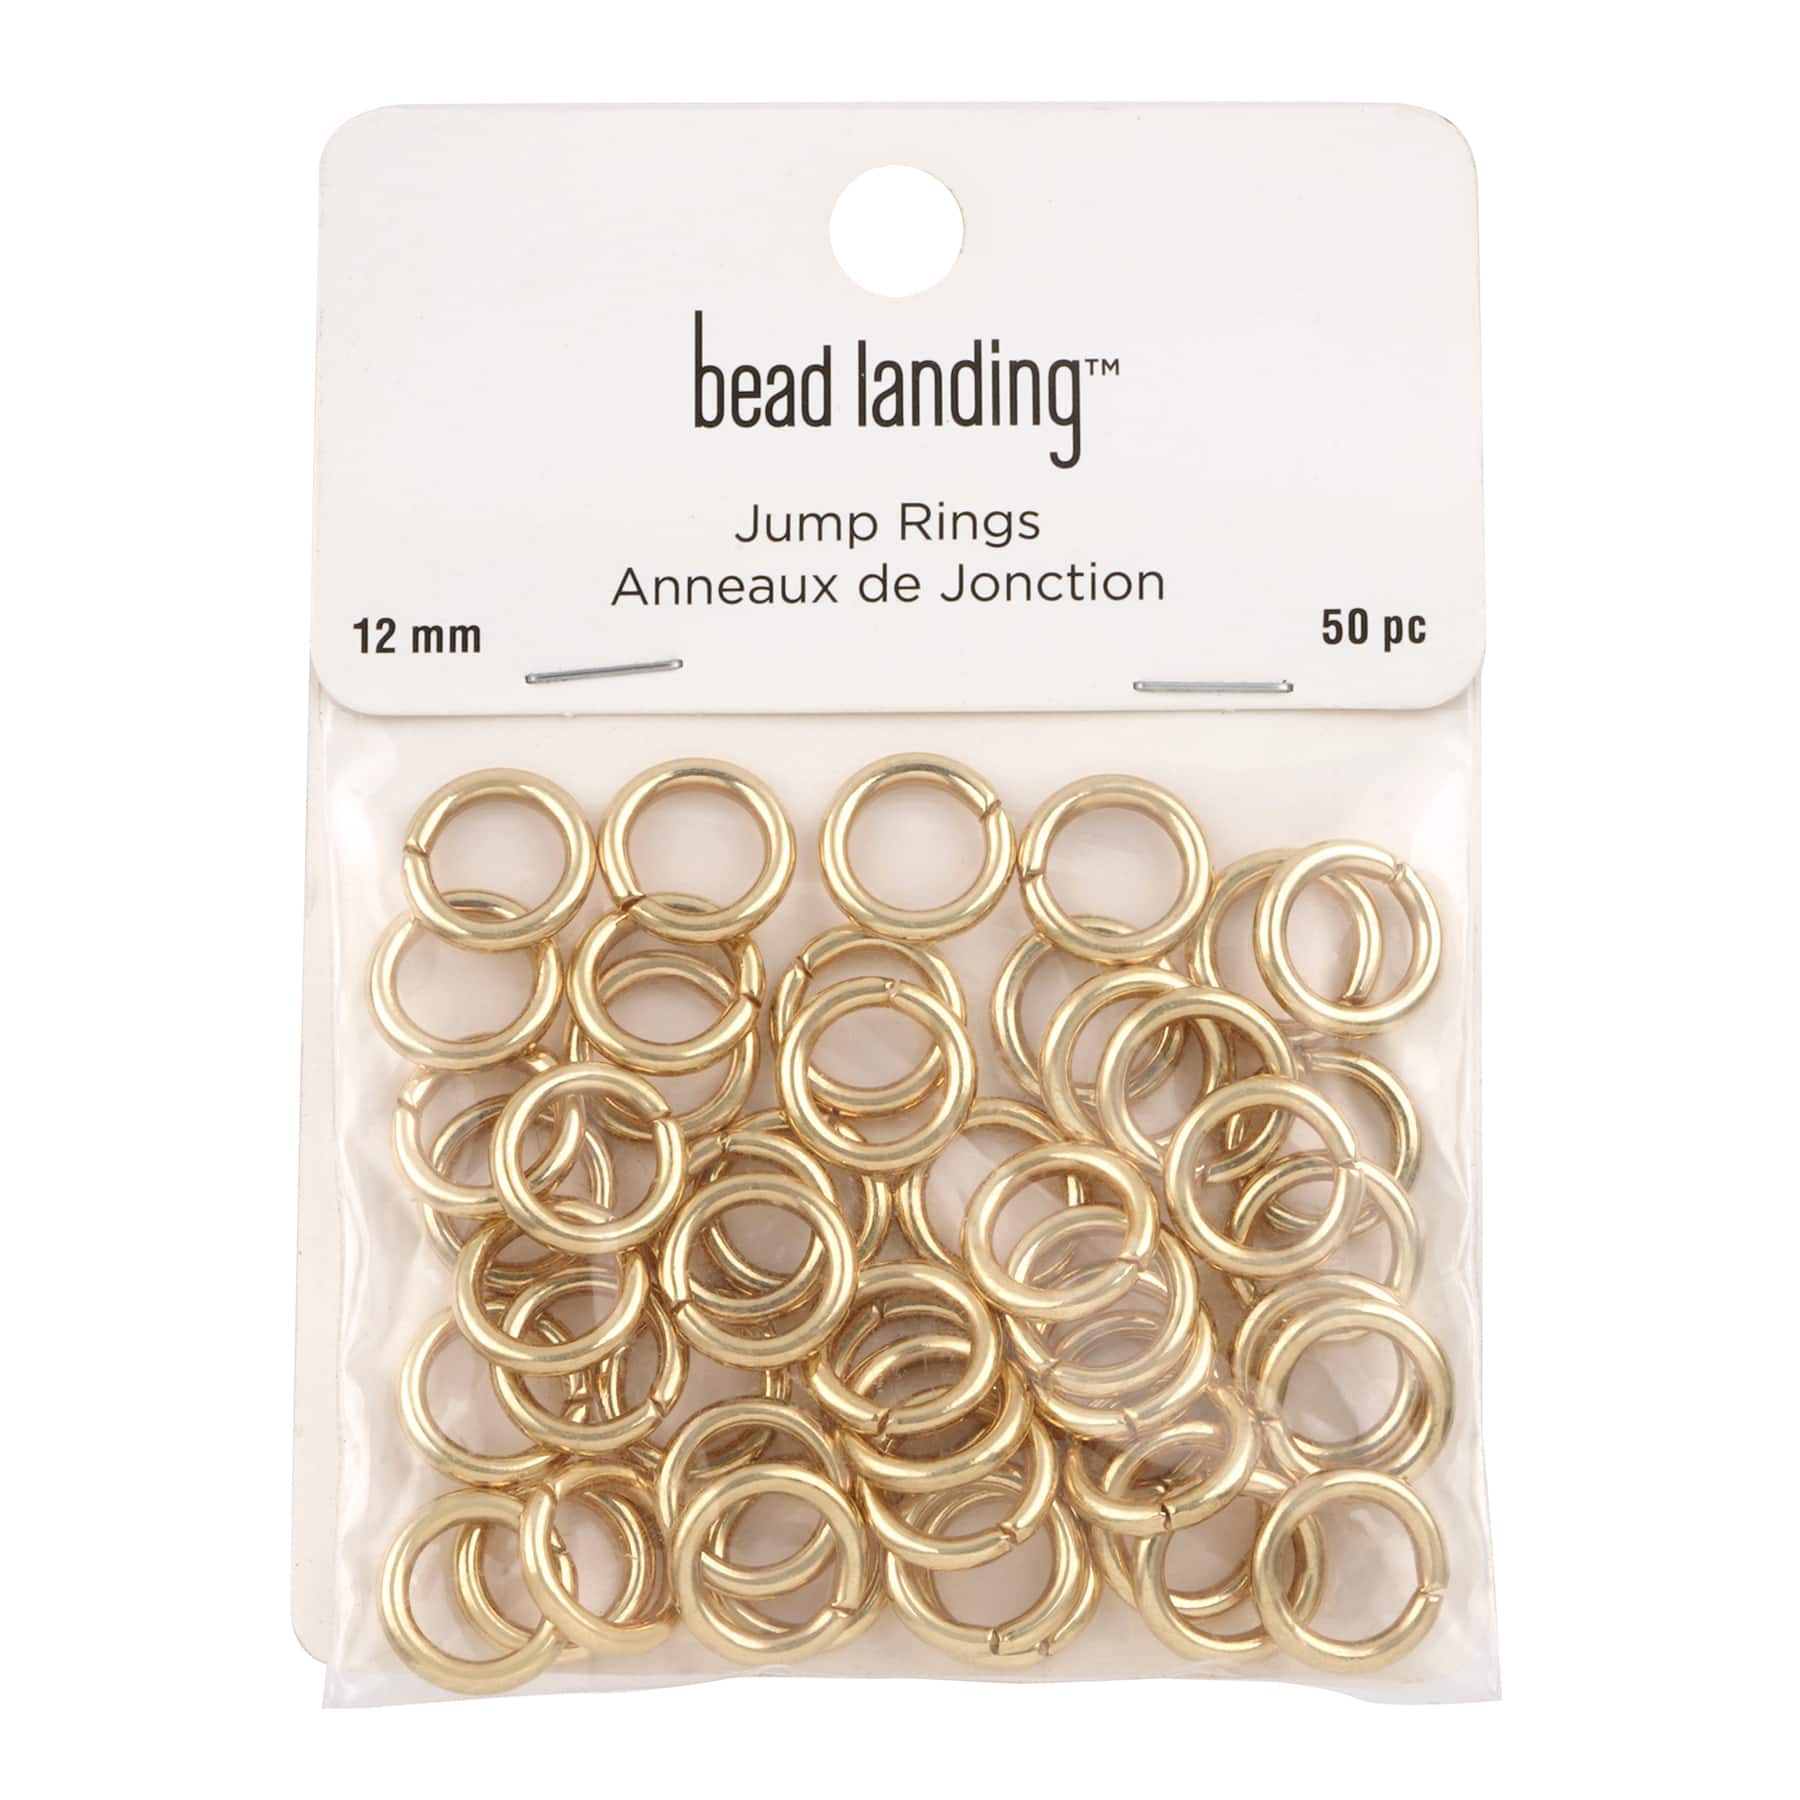 Jump Ring Kit by Bead Landing™, Michaels